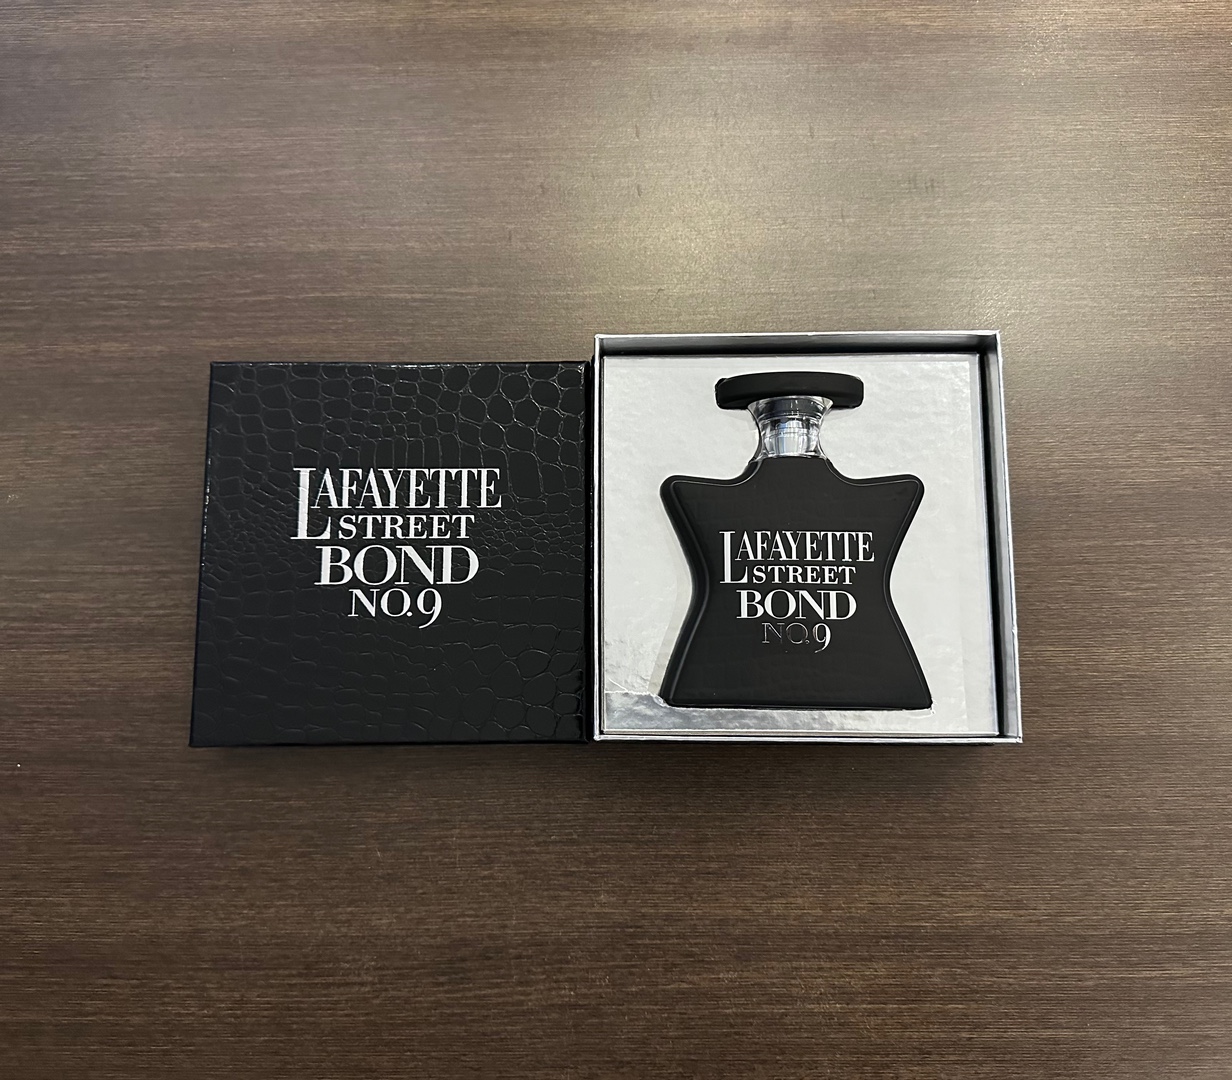 joyas, relojes y accesorios - Perfume Bond No.9 NYC LAFAYETTE STREET 100ML Original RD$ 17,000 NEG 1